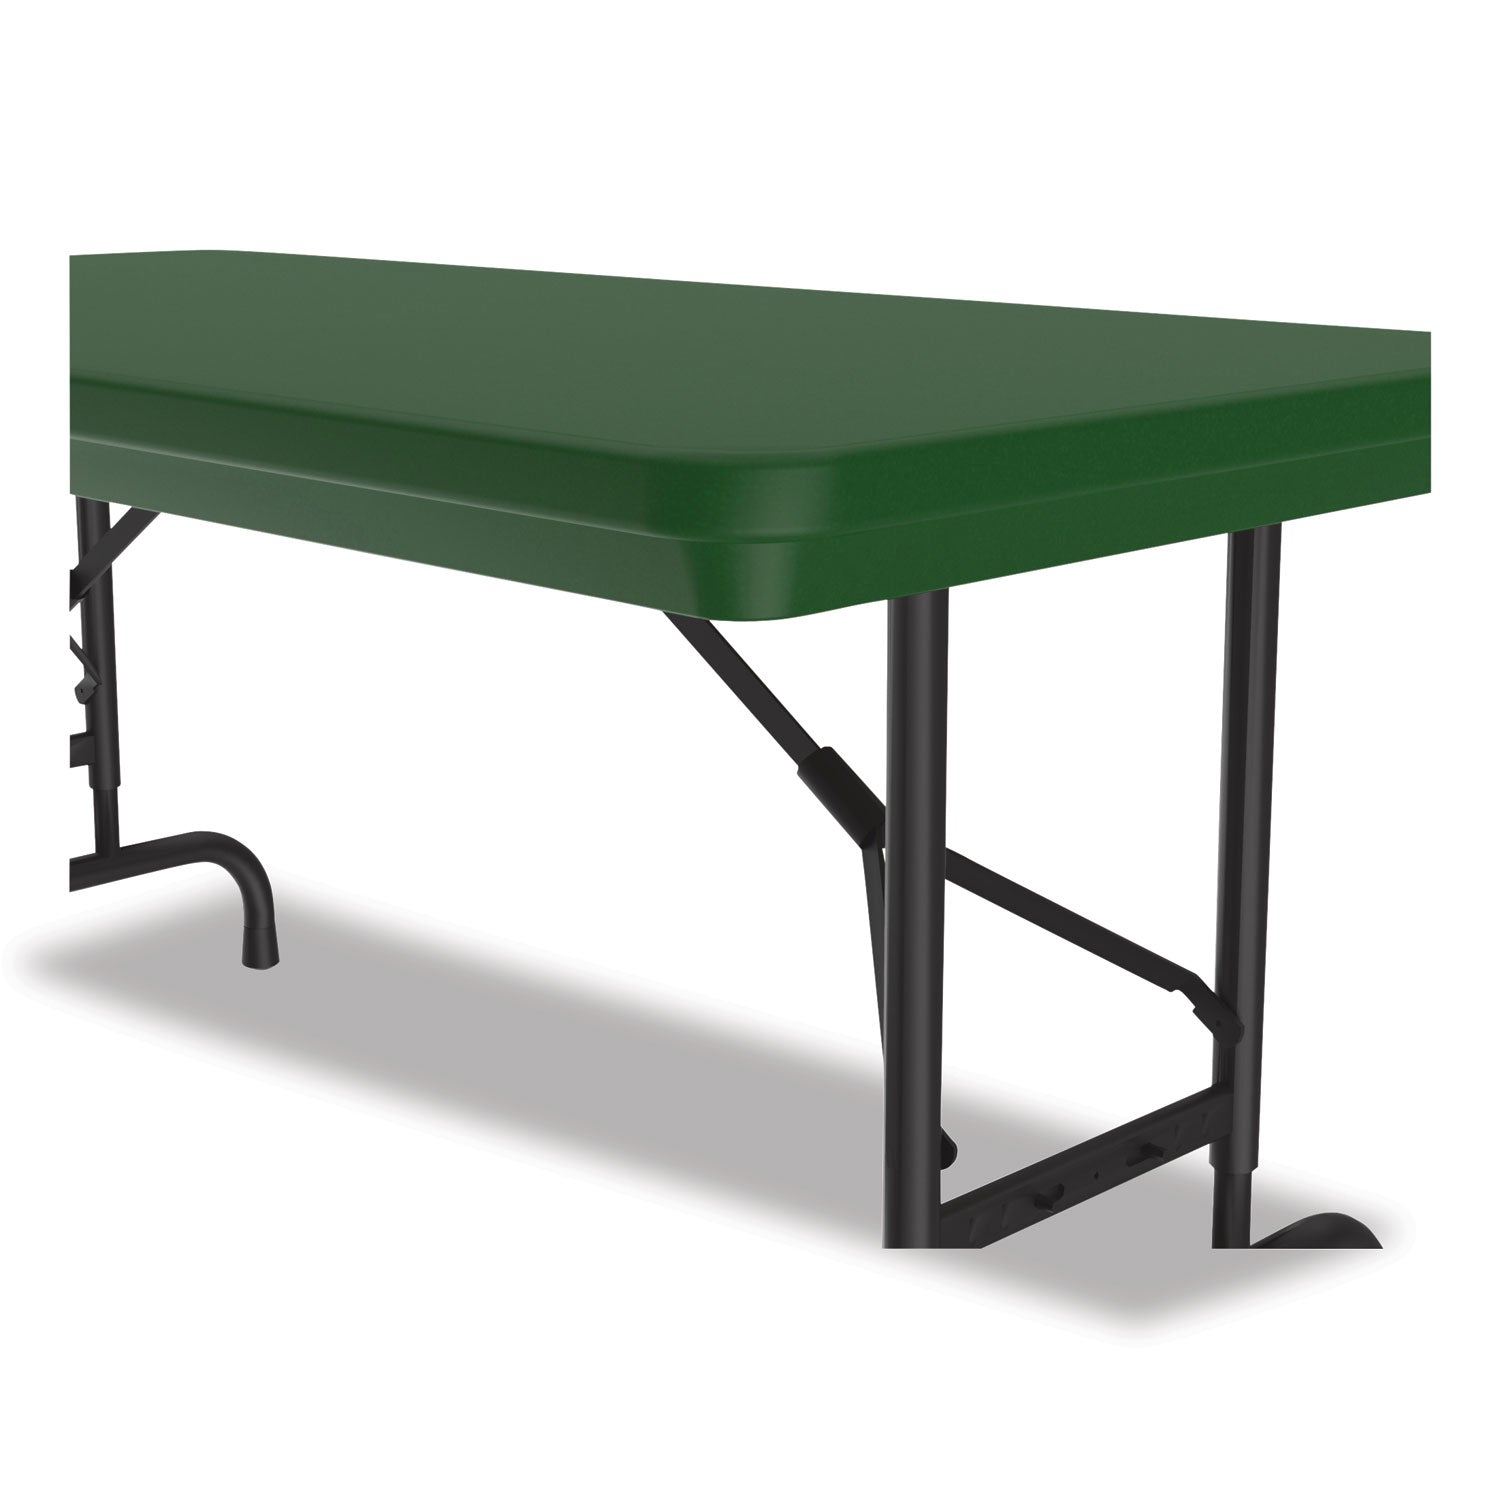 adjustable-folding-table-rectangular-48-x-24-x-22-to-32-green-top-black-legs-4-pallet-ships-in-4-6-business-days_crlra2448294p - 5